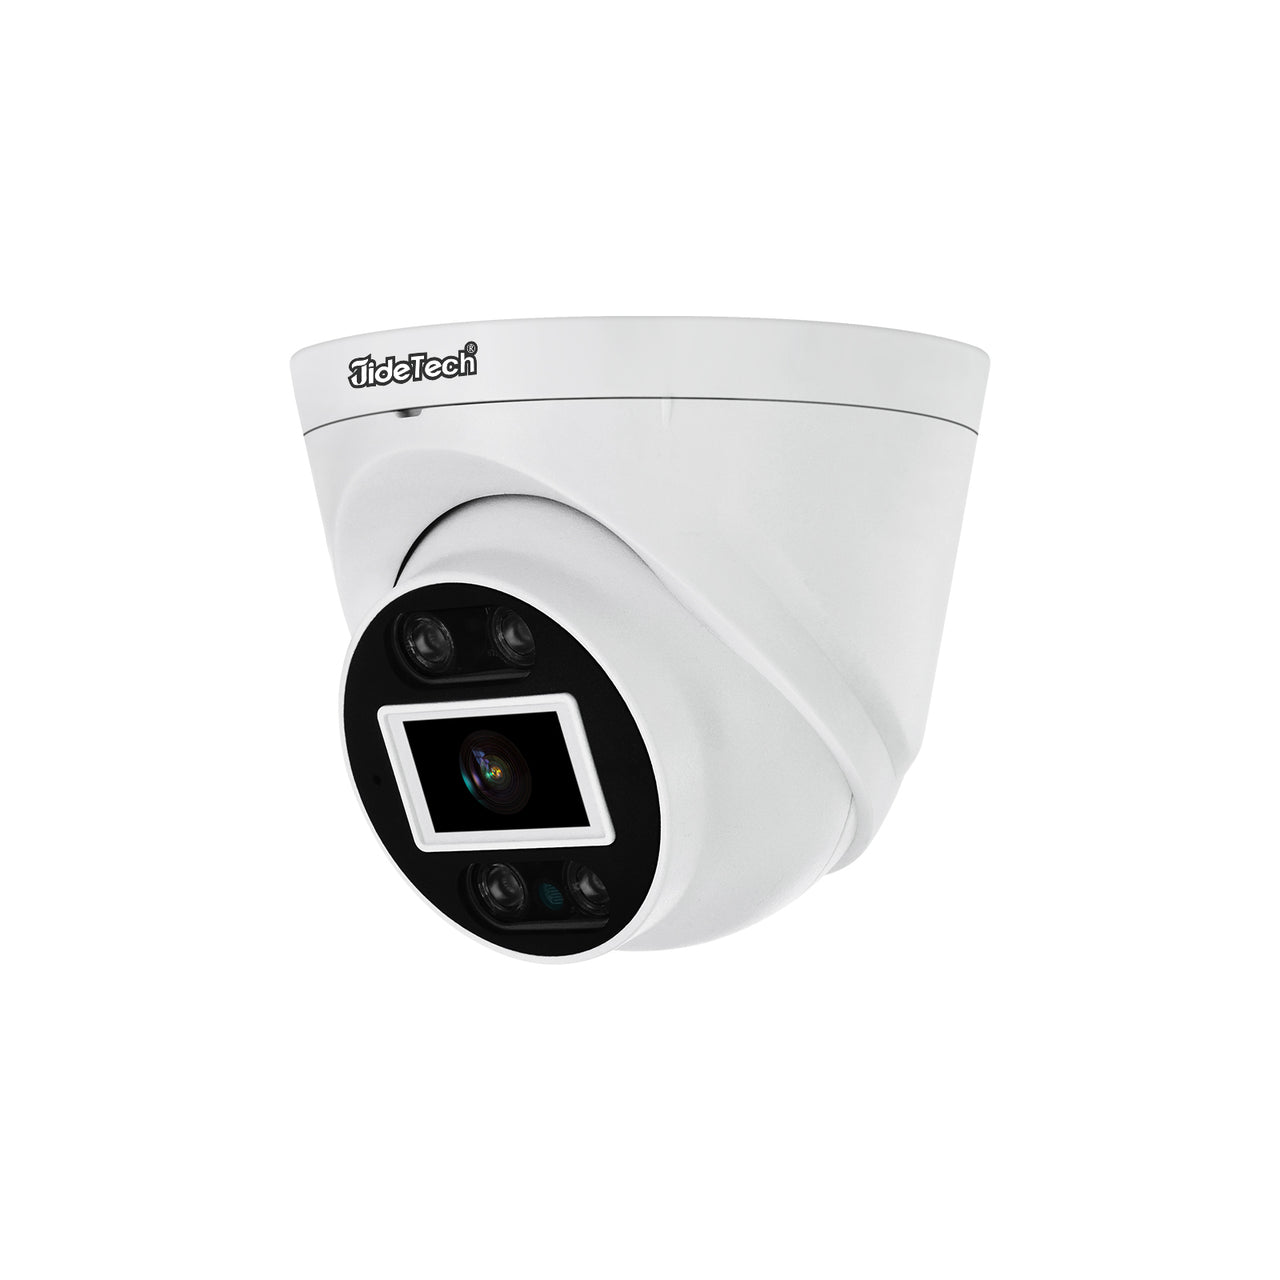 JideTech PoE 5MP Security IP Camera (DM02-5MP)